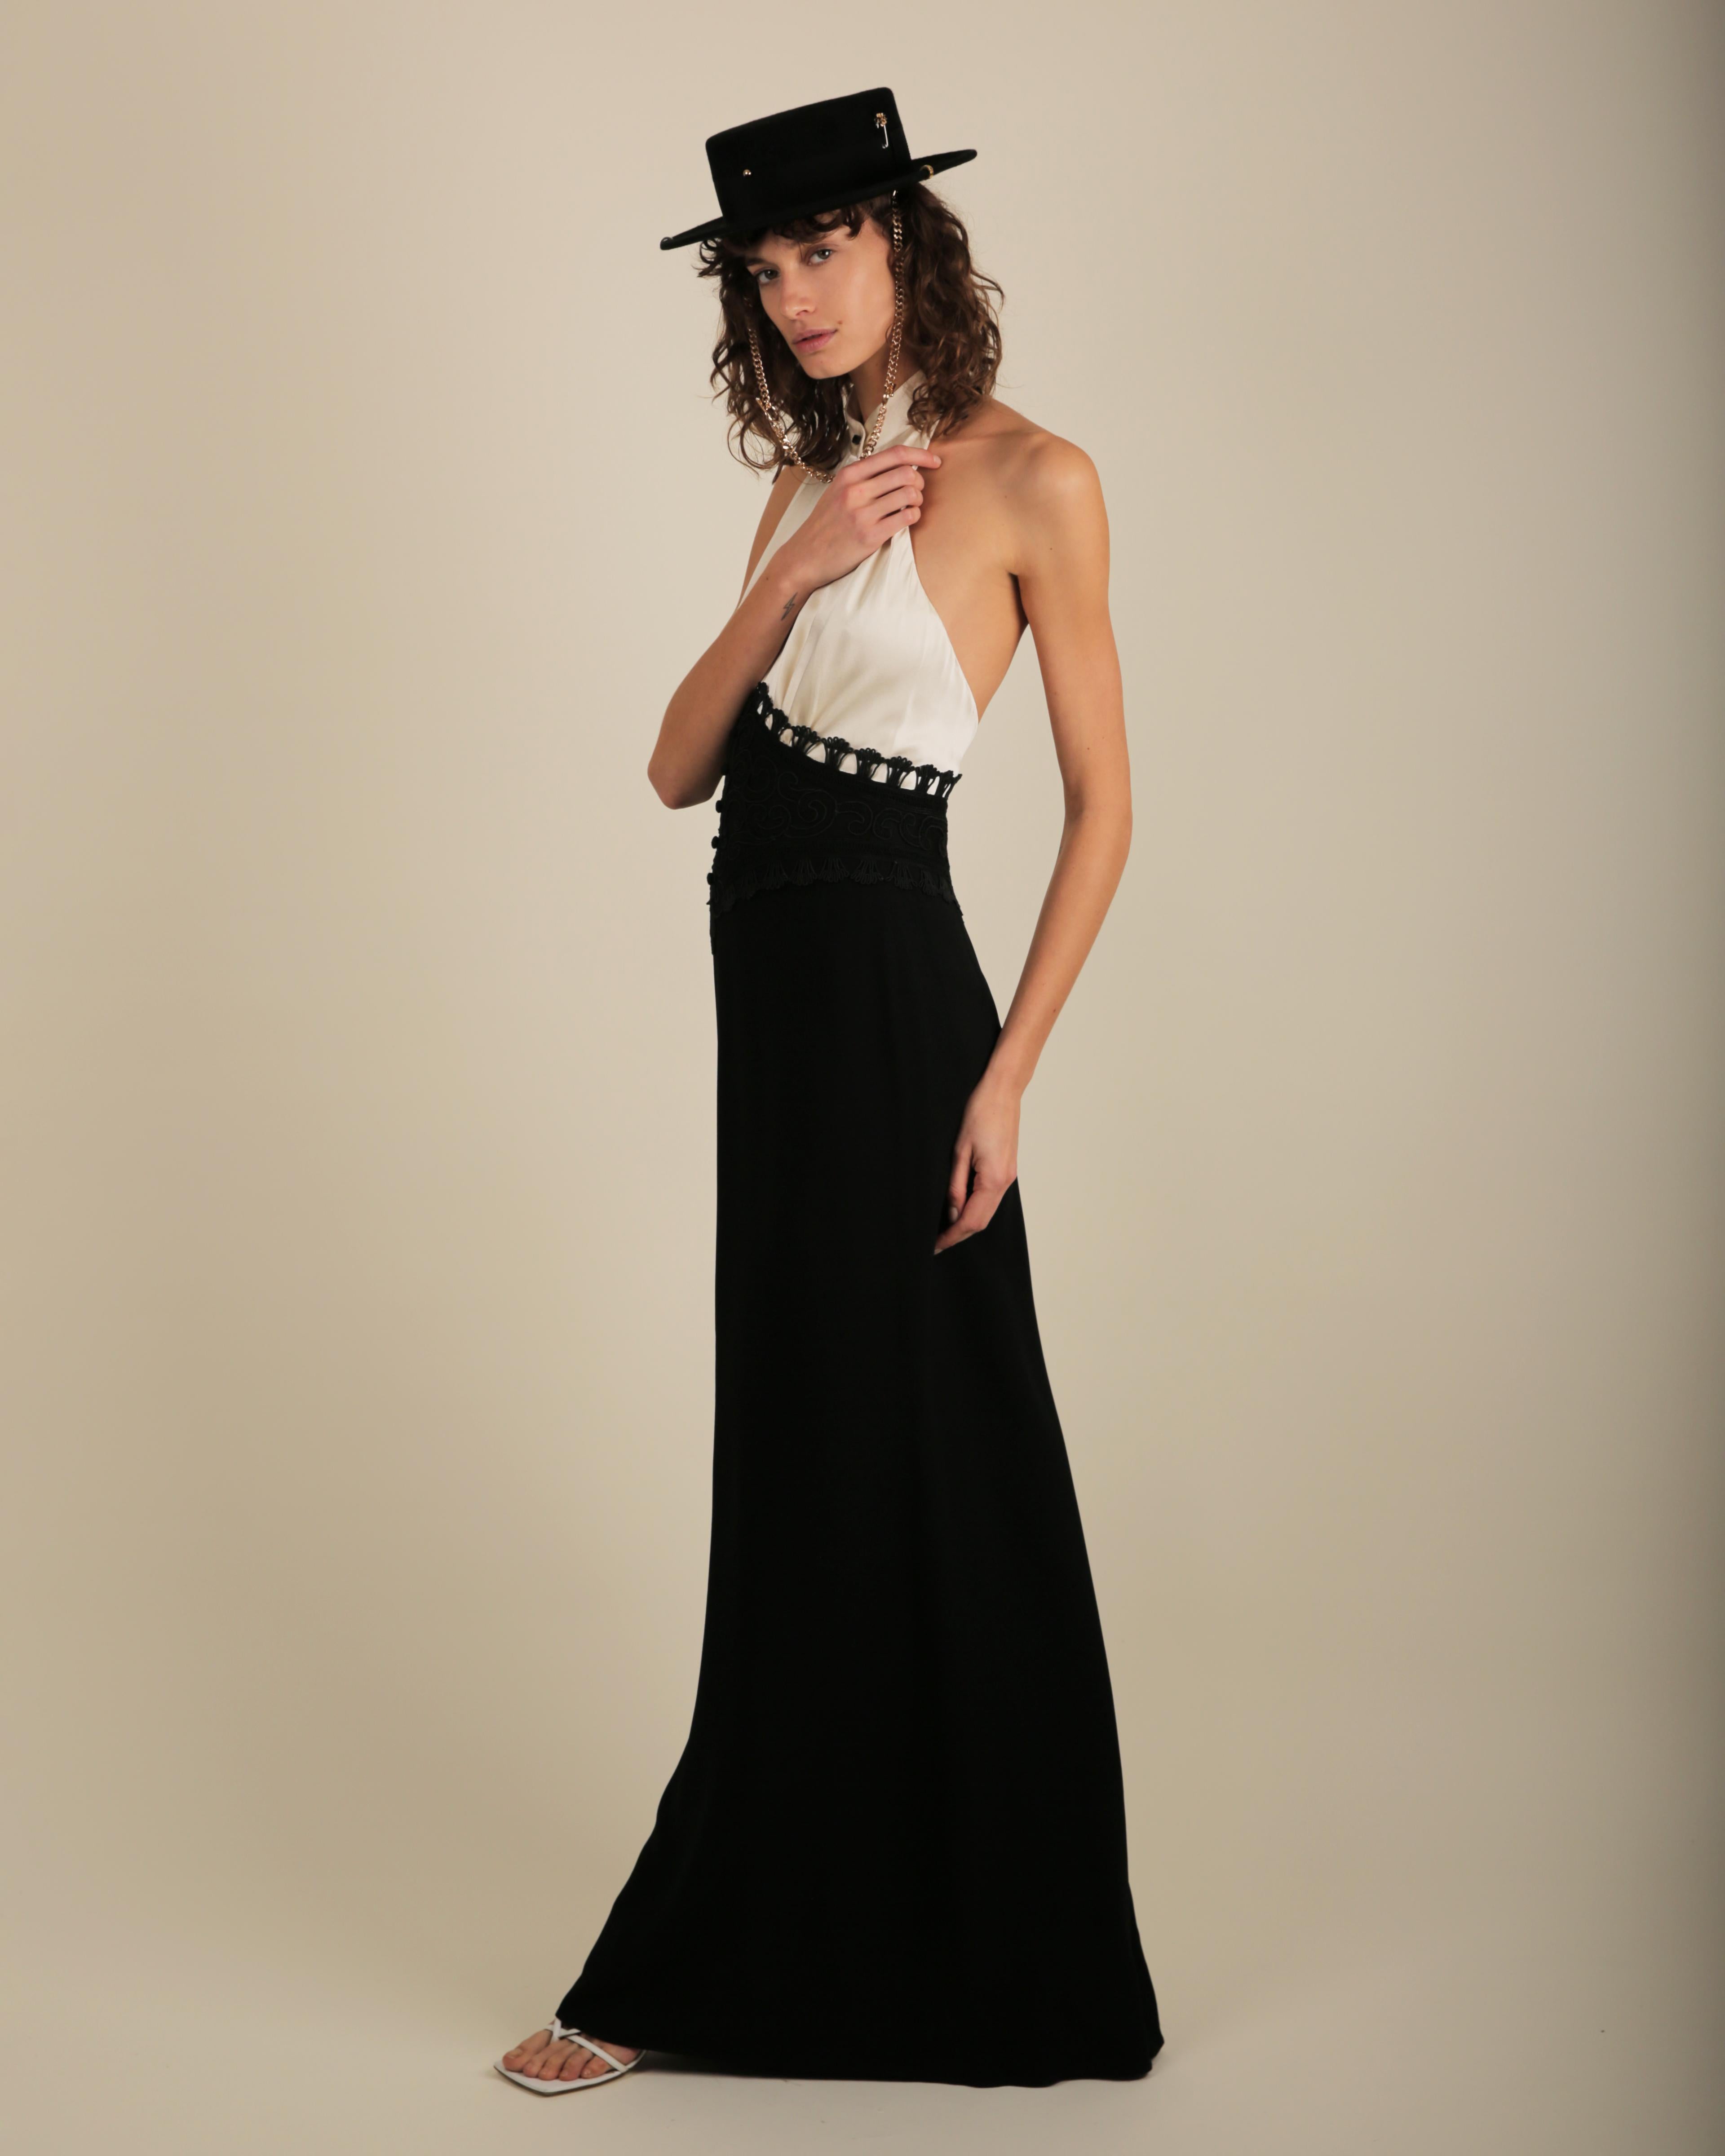 Black Ralph Lauren SS 2013 black white sleeveless halter backless button up dress gown For Sale